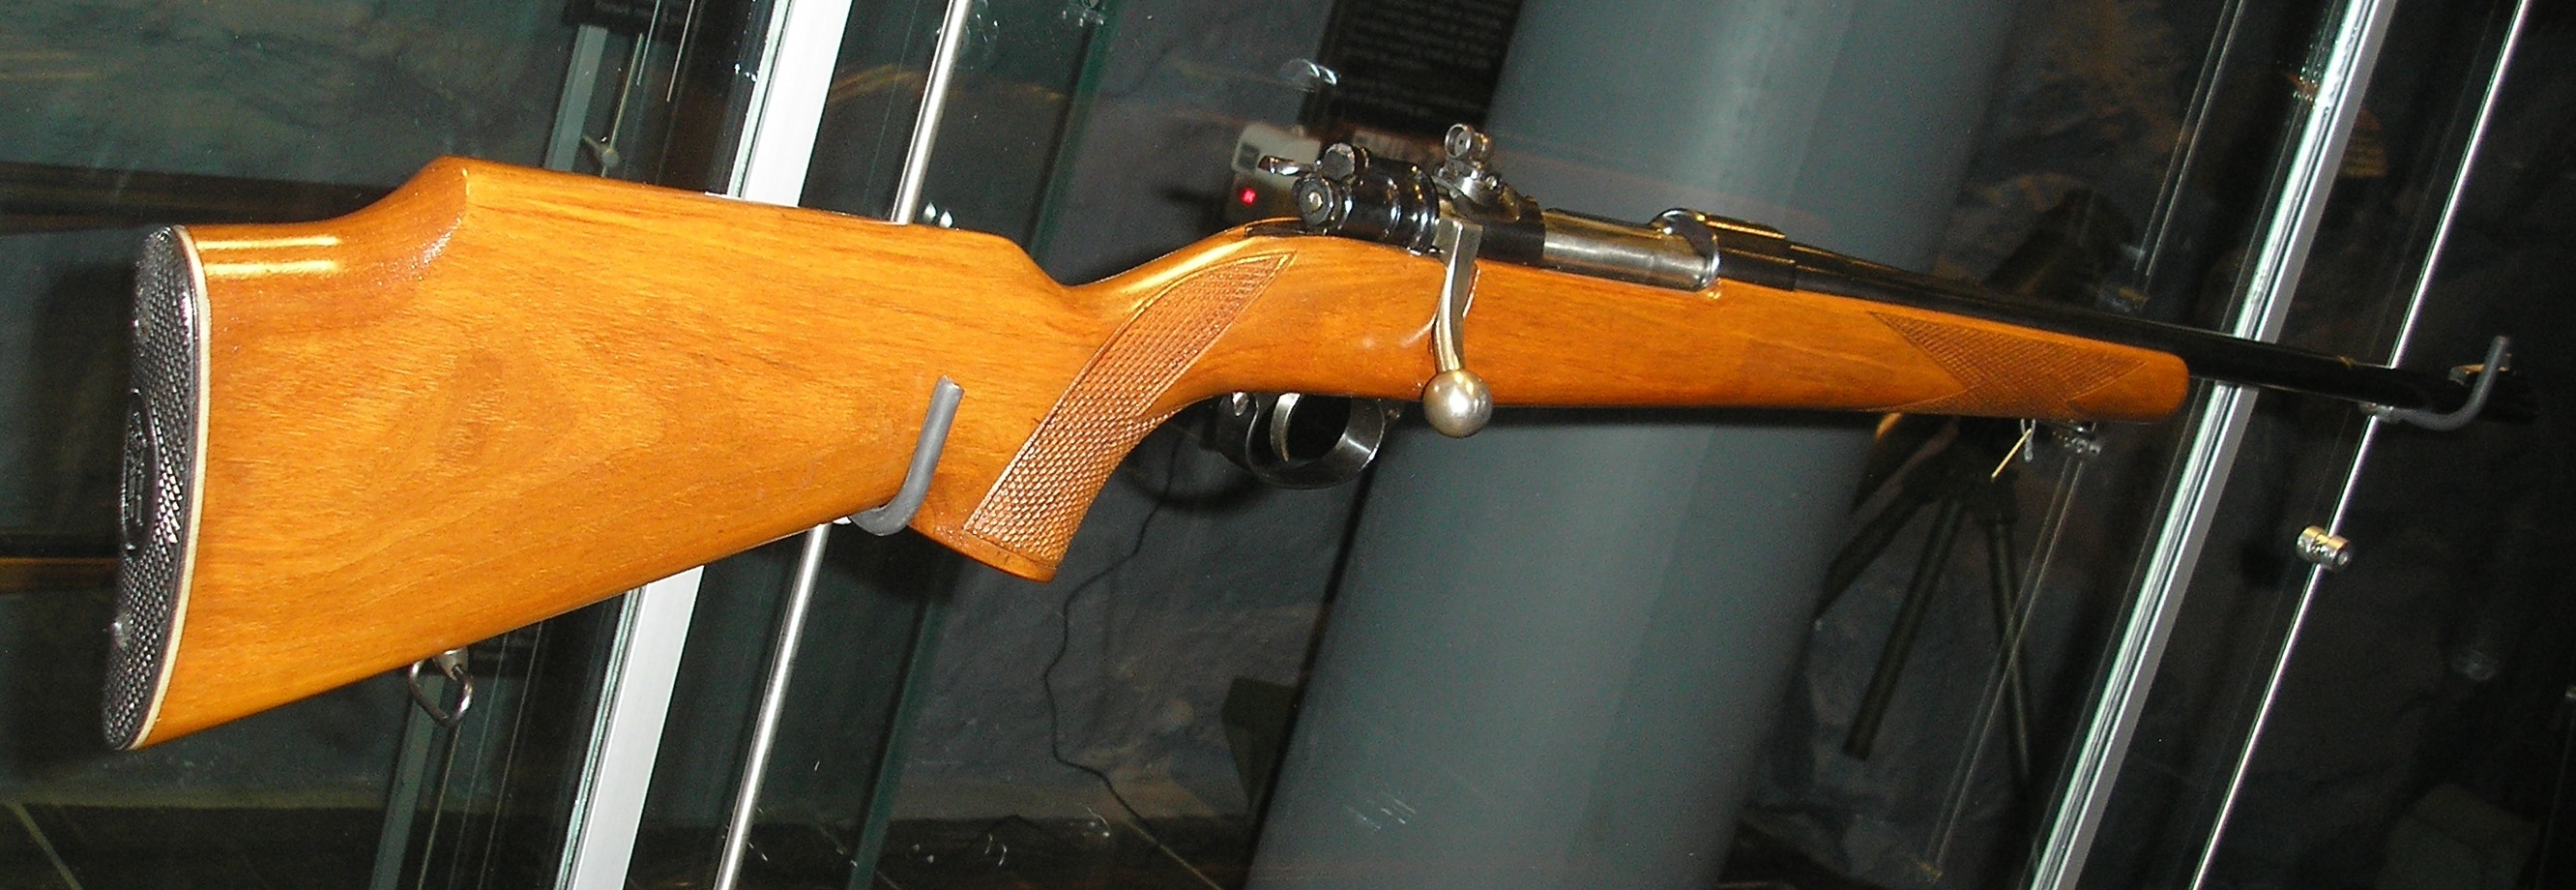 ./guns/rifle/bilder/Rifle-Kongsberg-Mauser-M62-1488-1.JPG